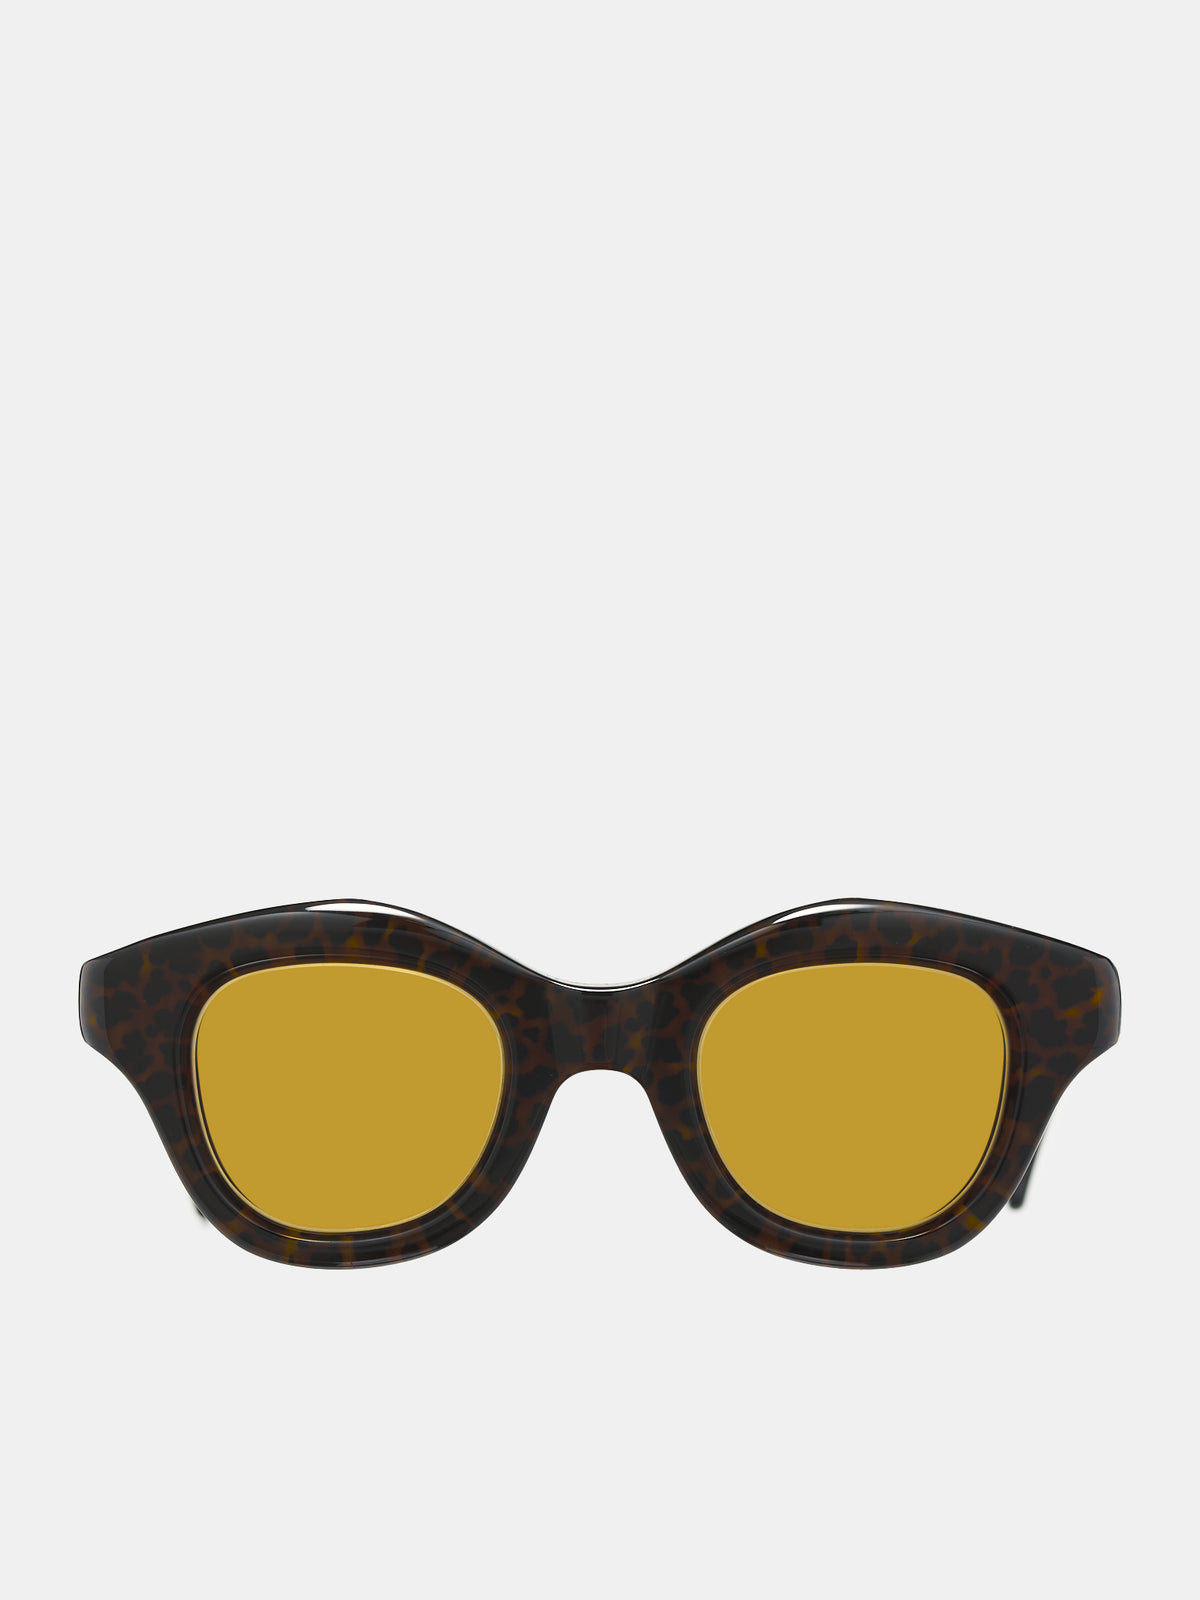 Hook Sunglasses (HOOK-PANTHER-AMBER3)